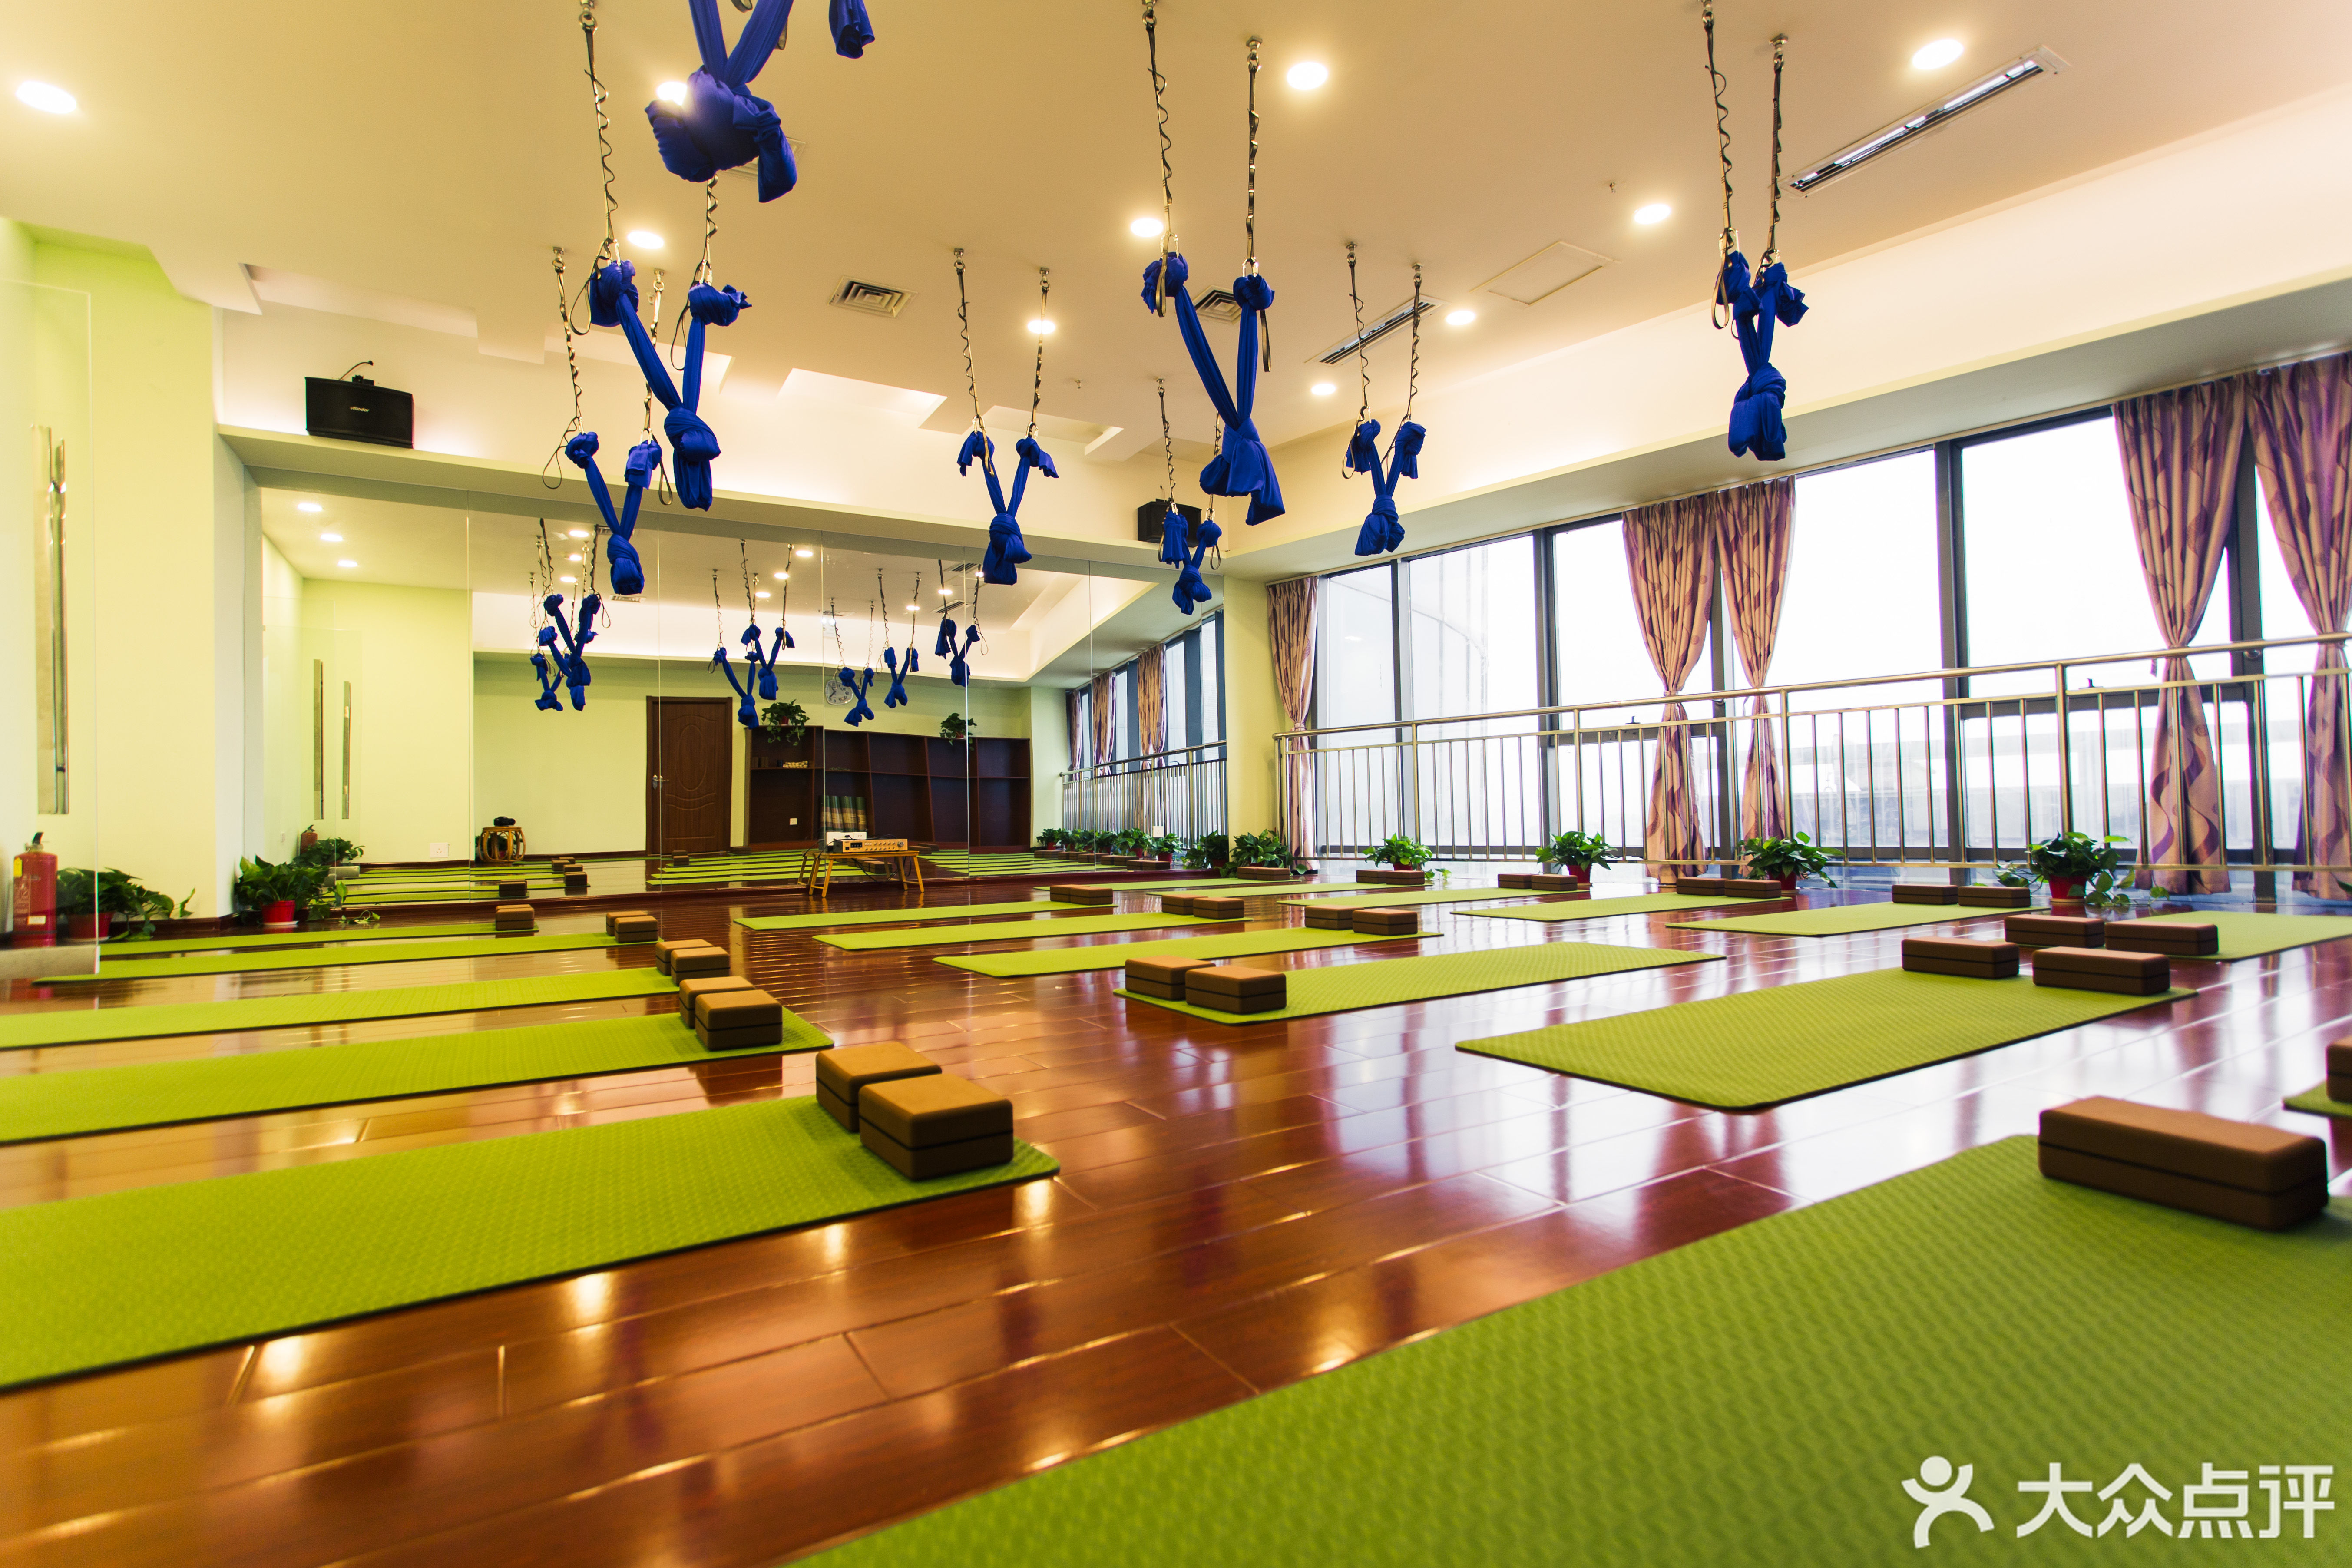 yogasala瑜伽会馆图片